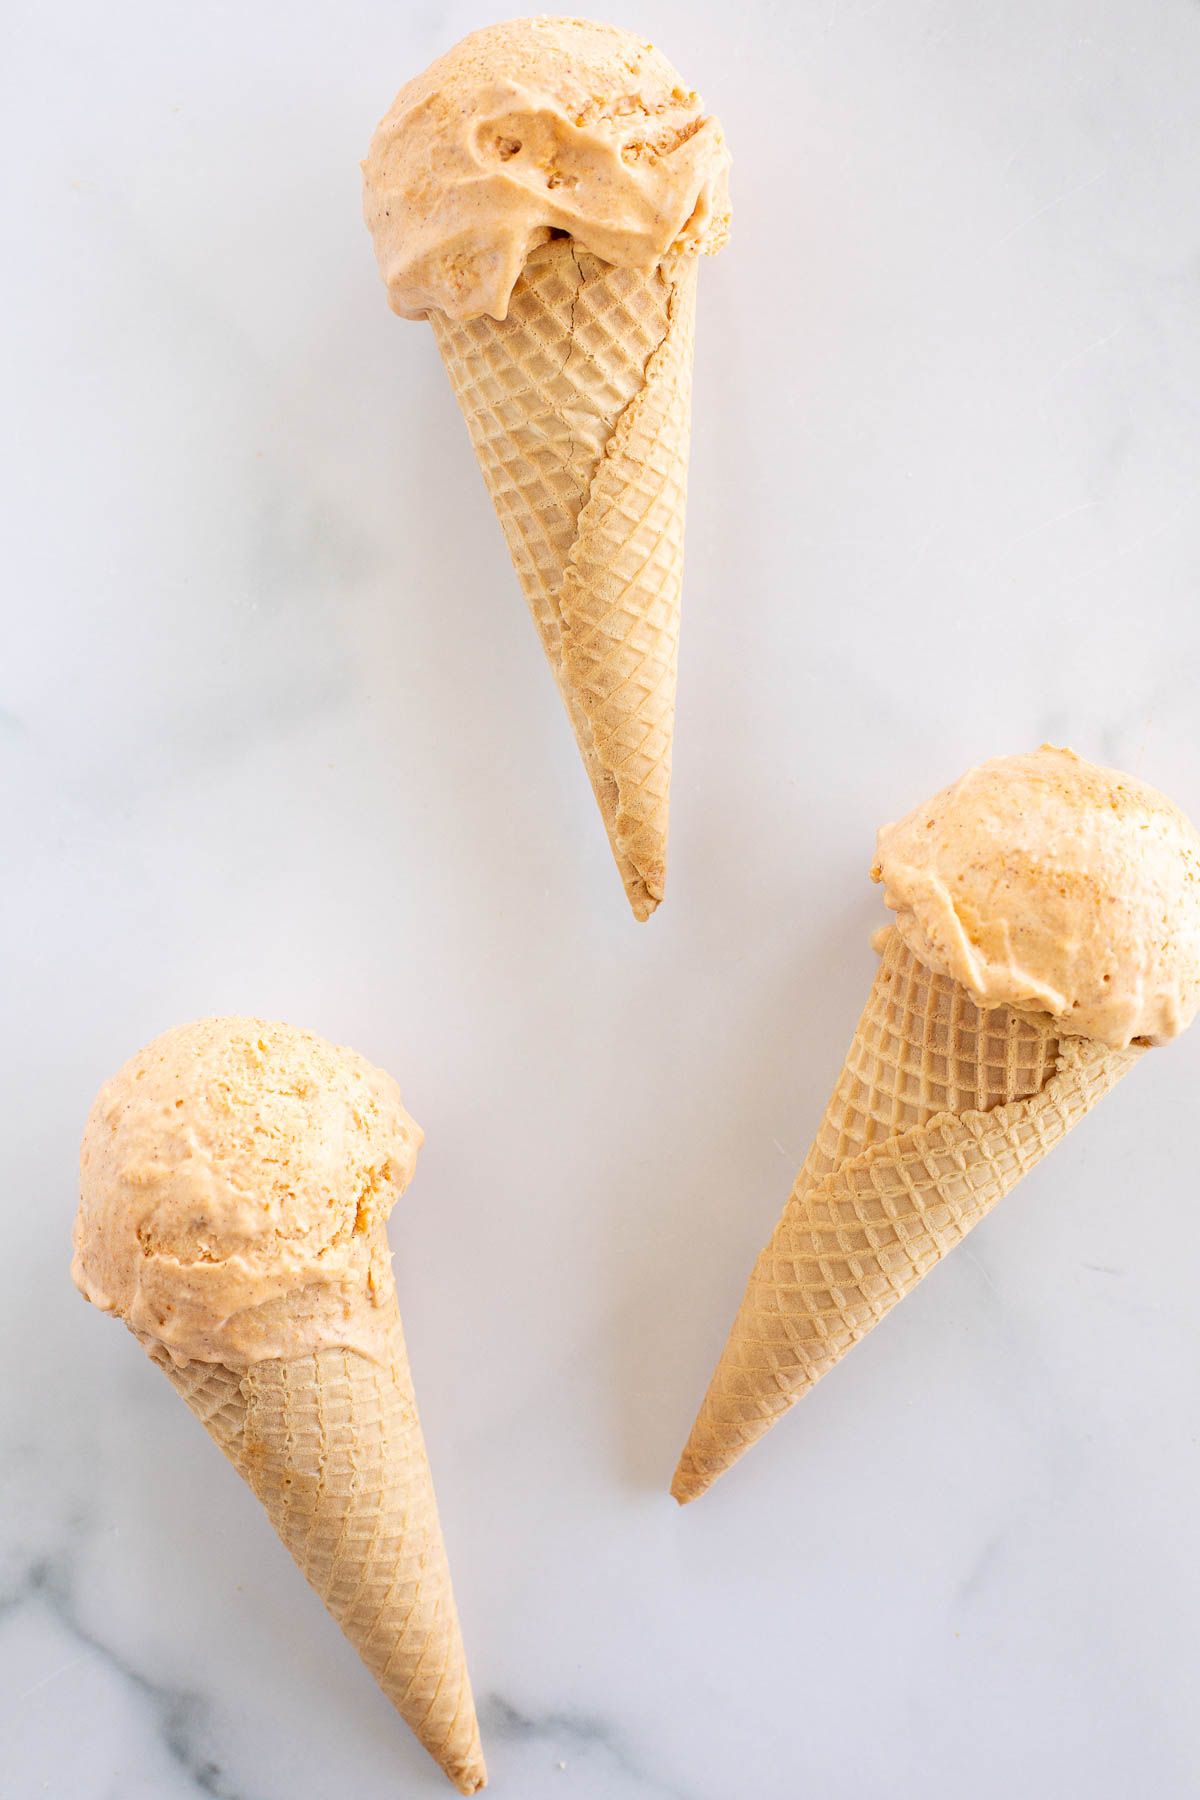 Three ice cream cones full of pumpkin ice cream laying on a marble countertop